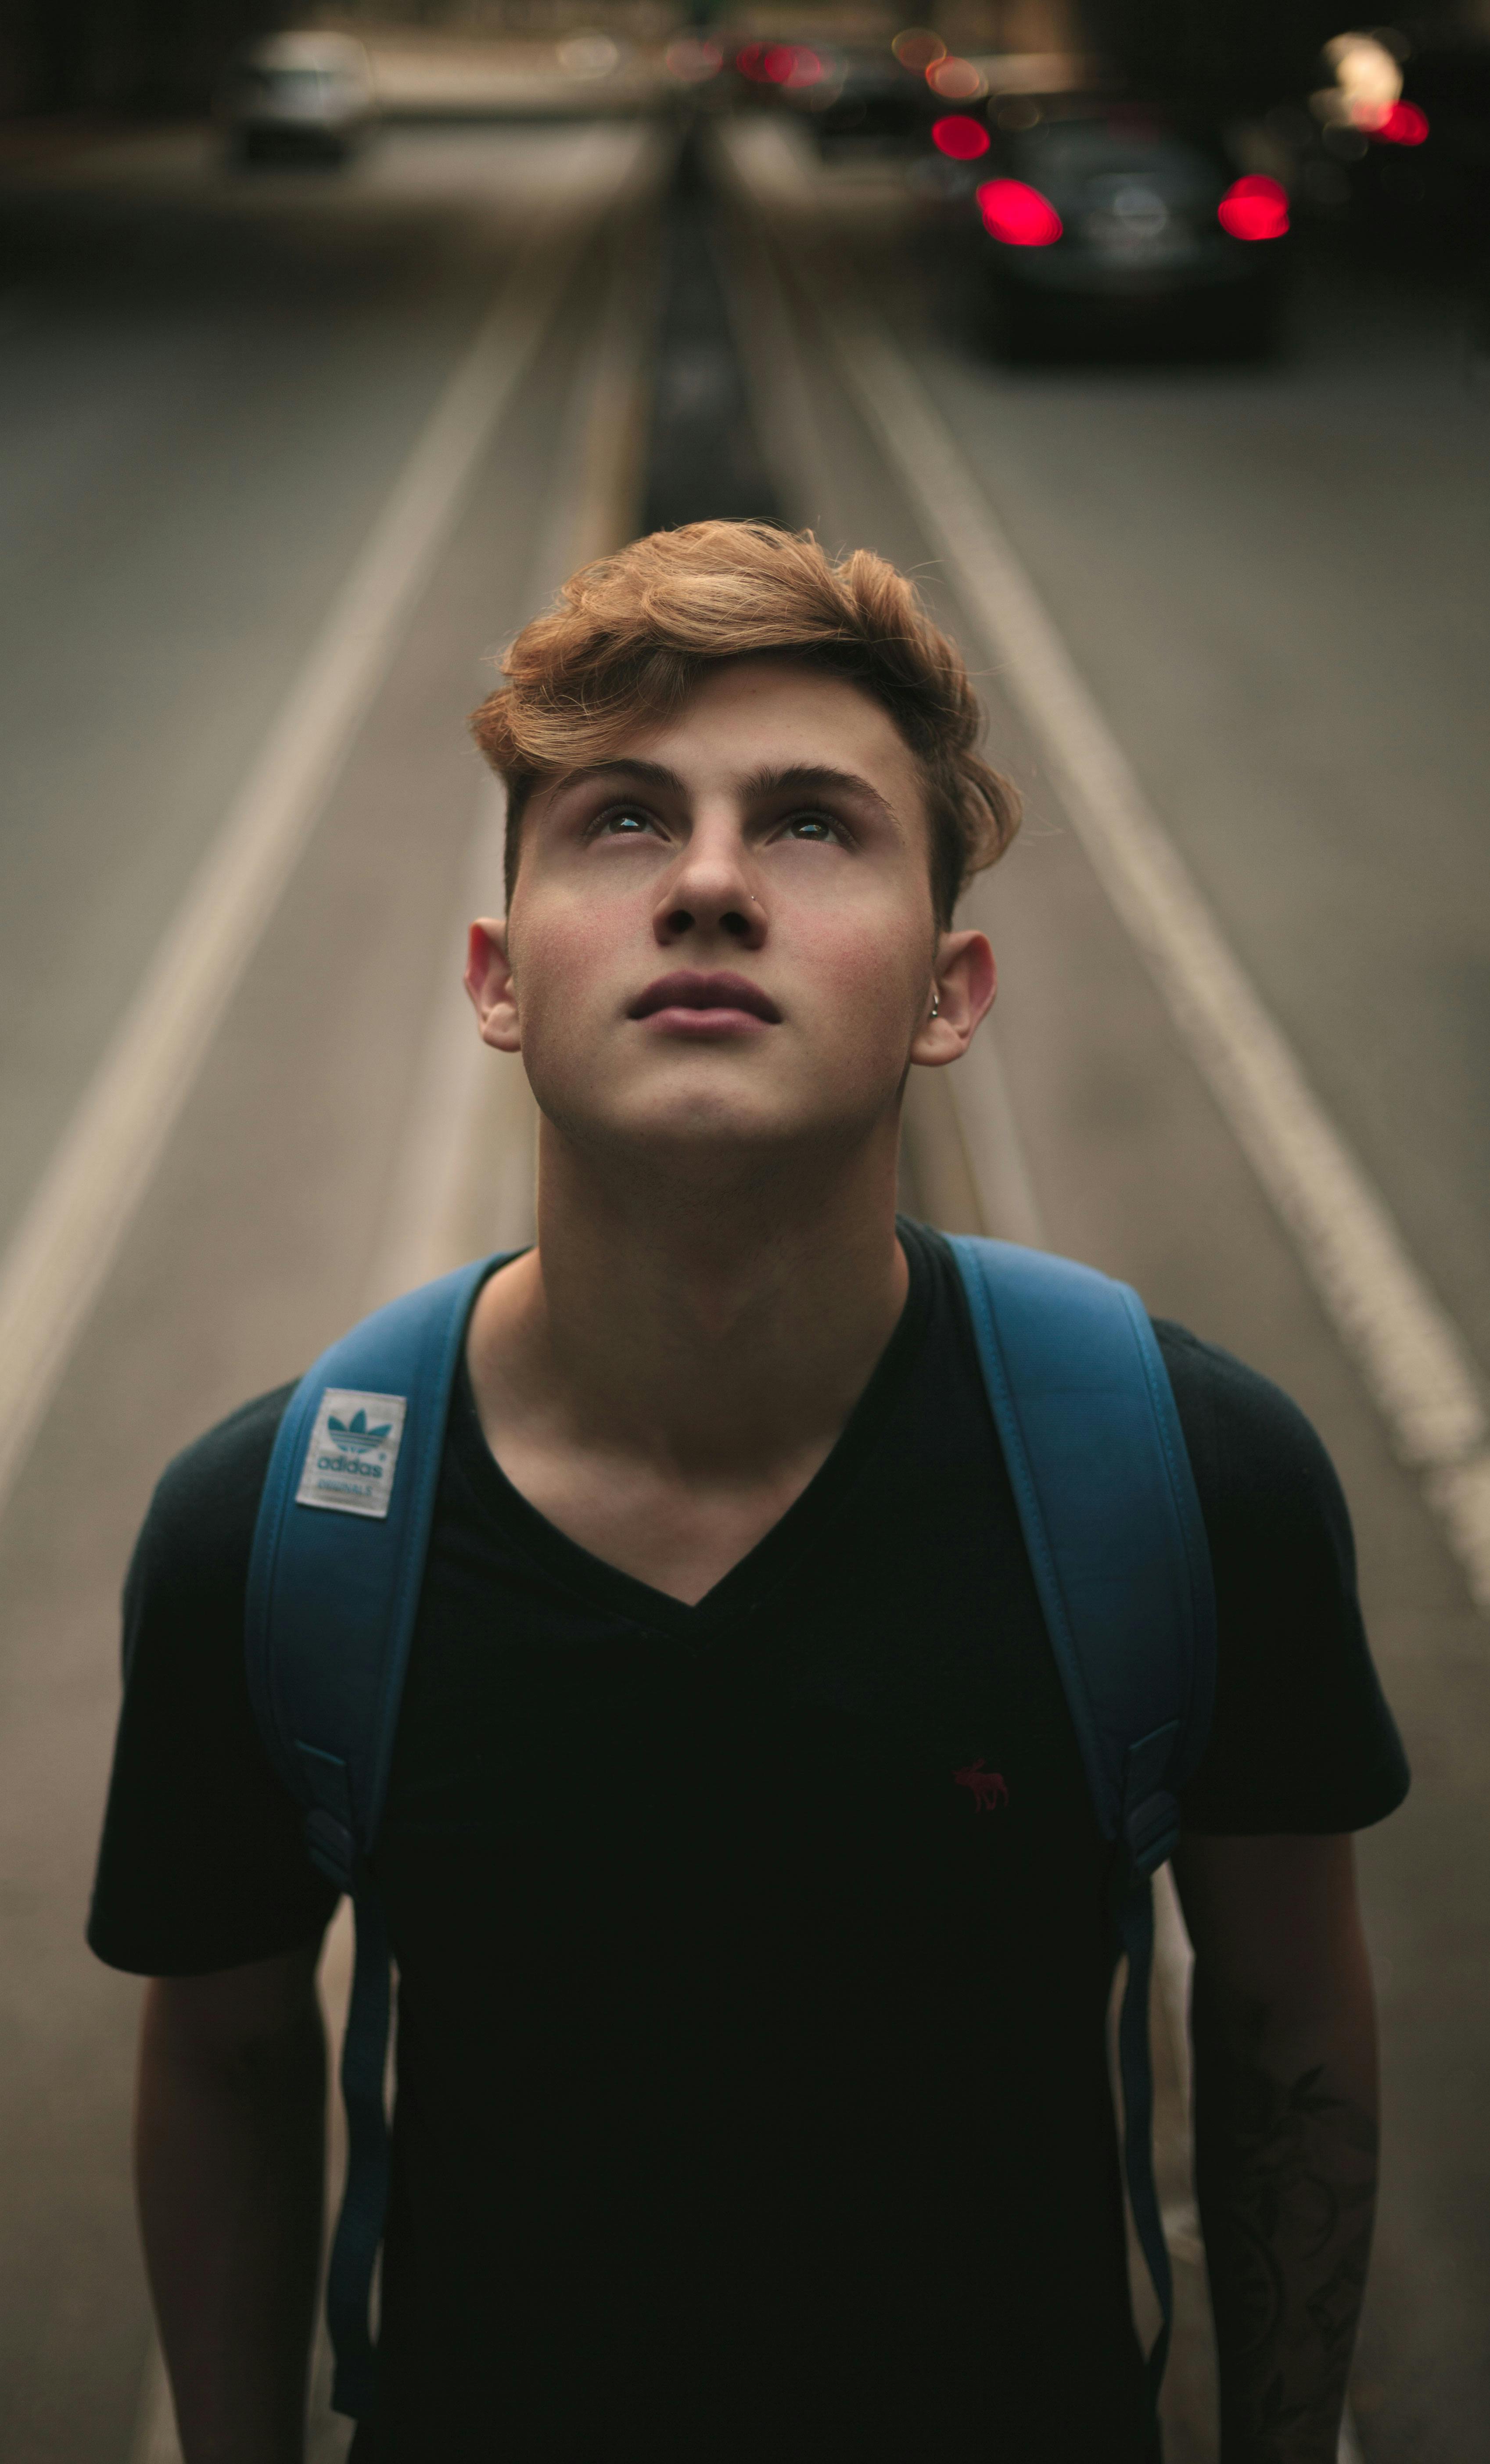 Teen boy on the road | Source: Pexels